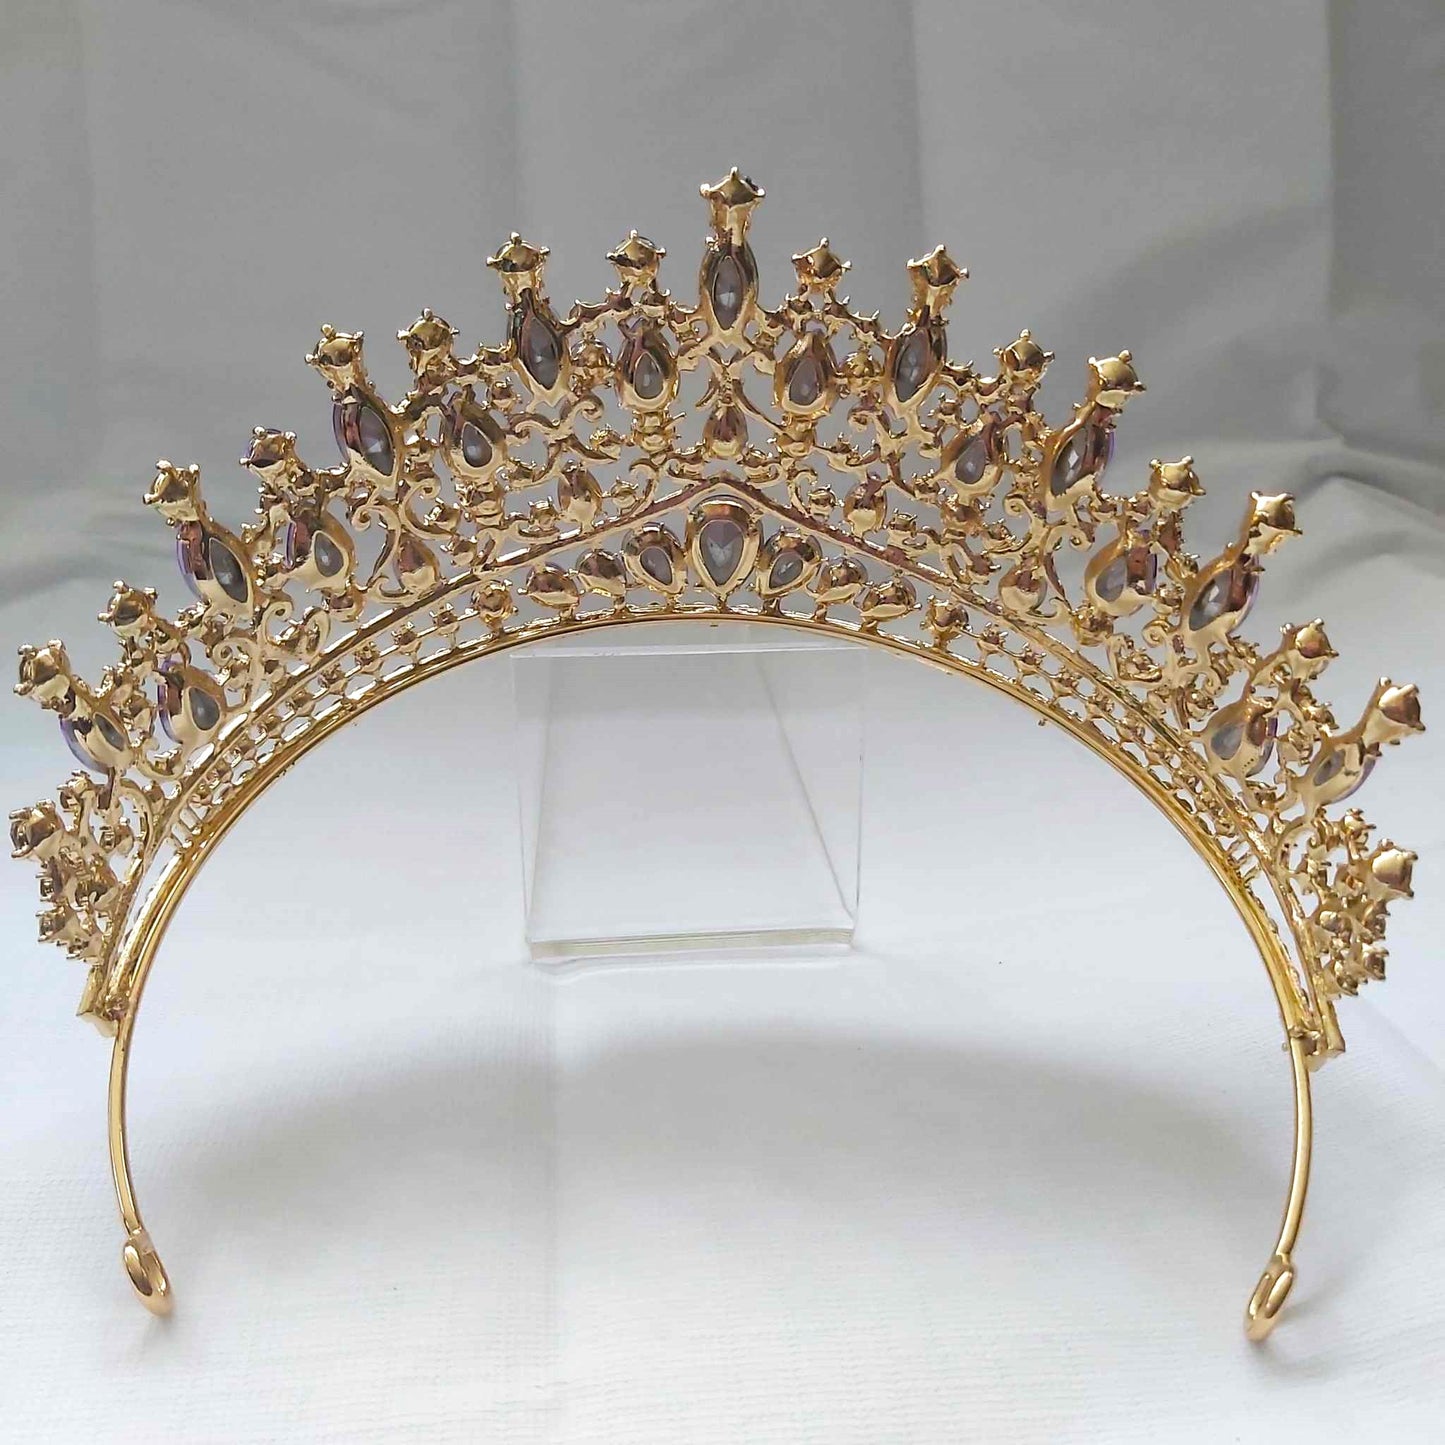 Purple Rhinestones Crown Tiara Baroque Handmade (CR25)